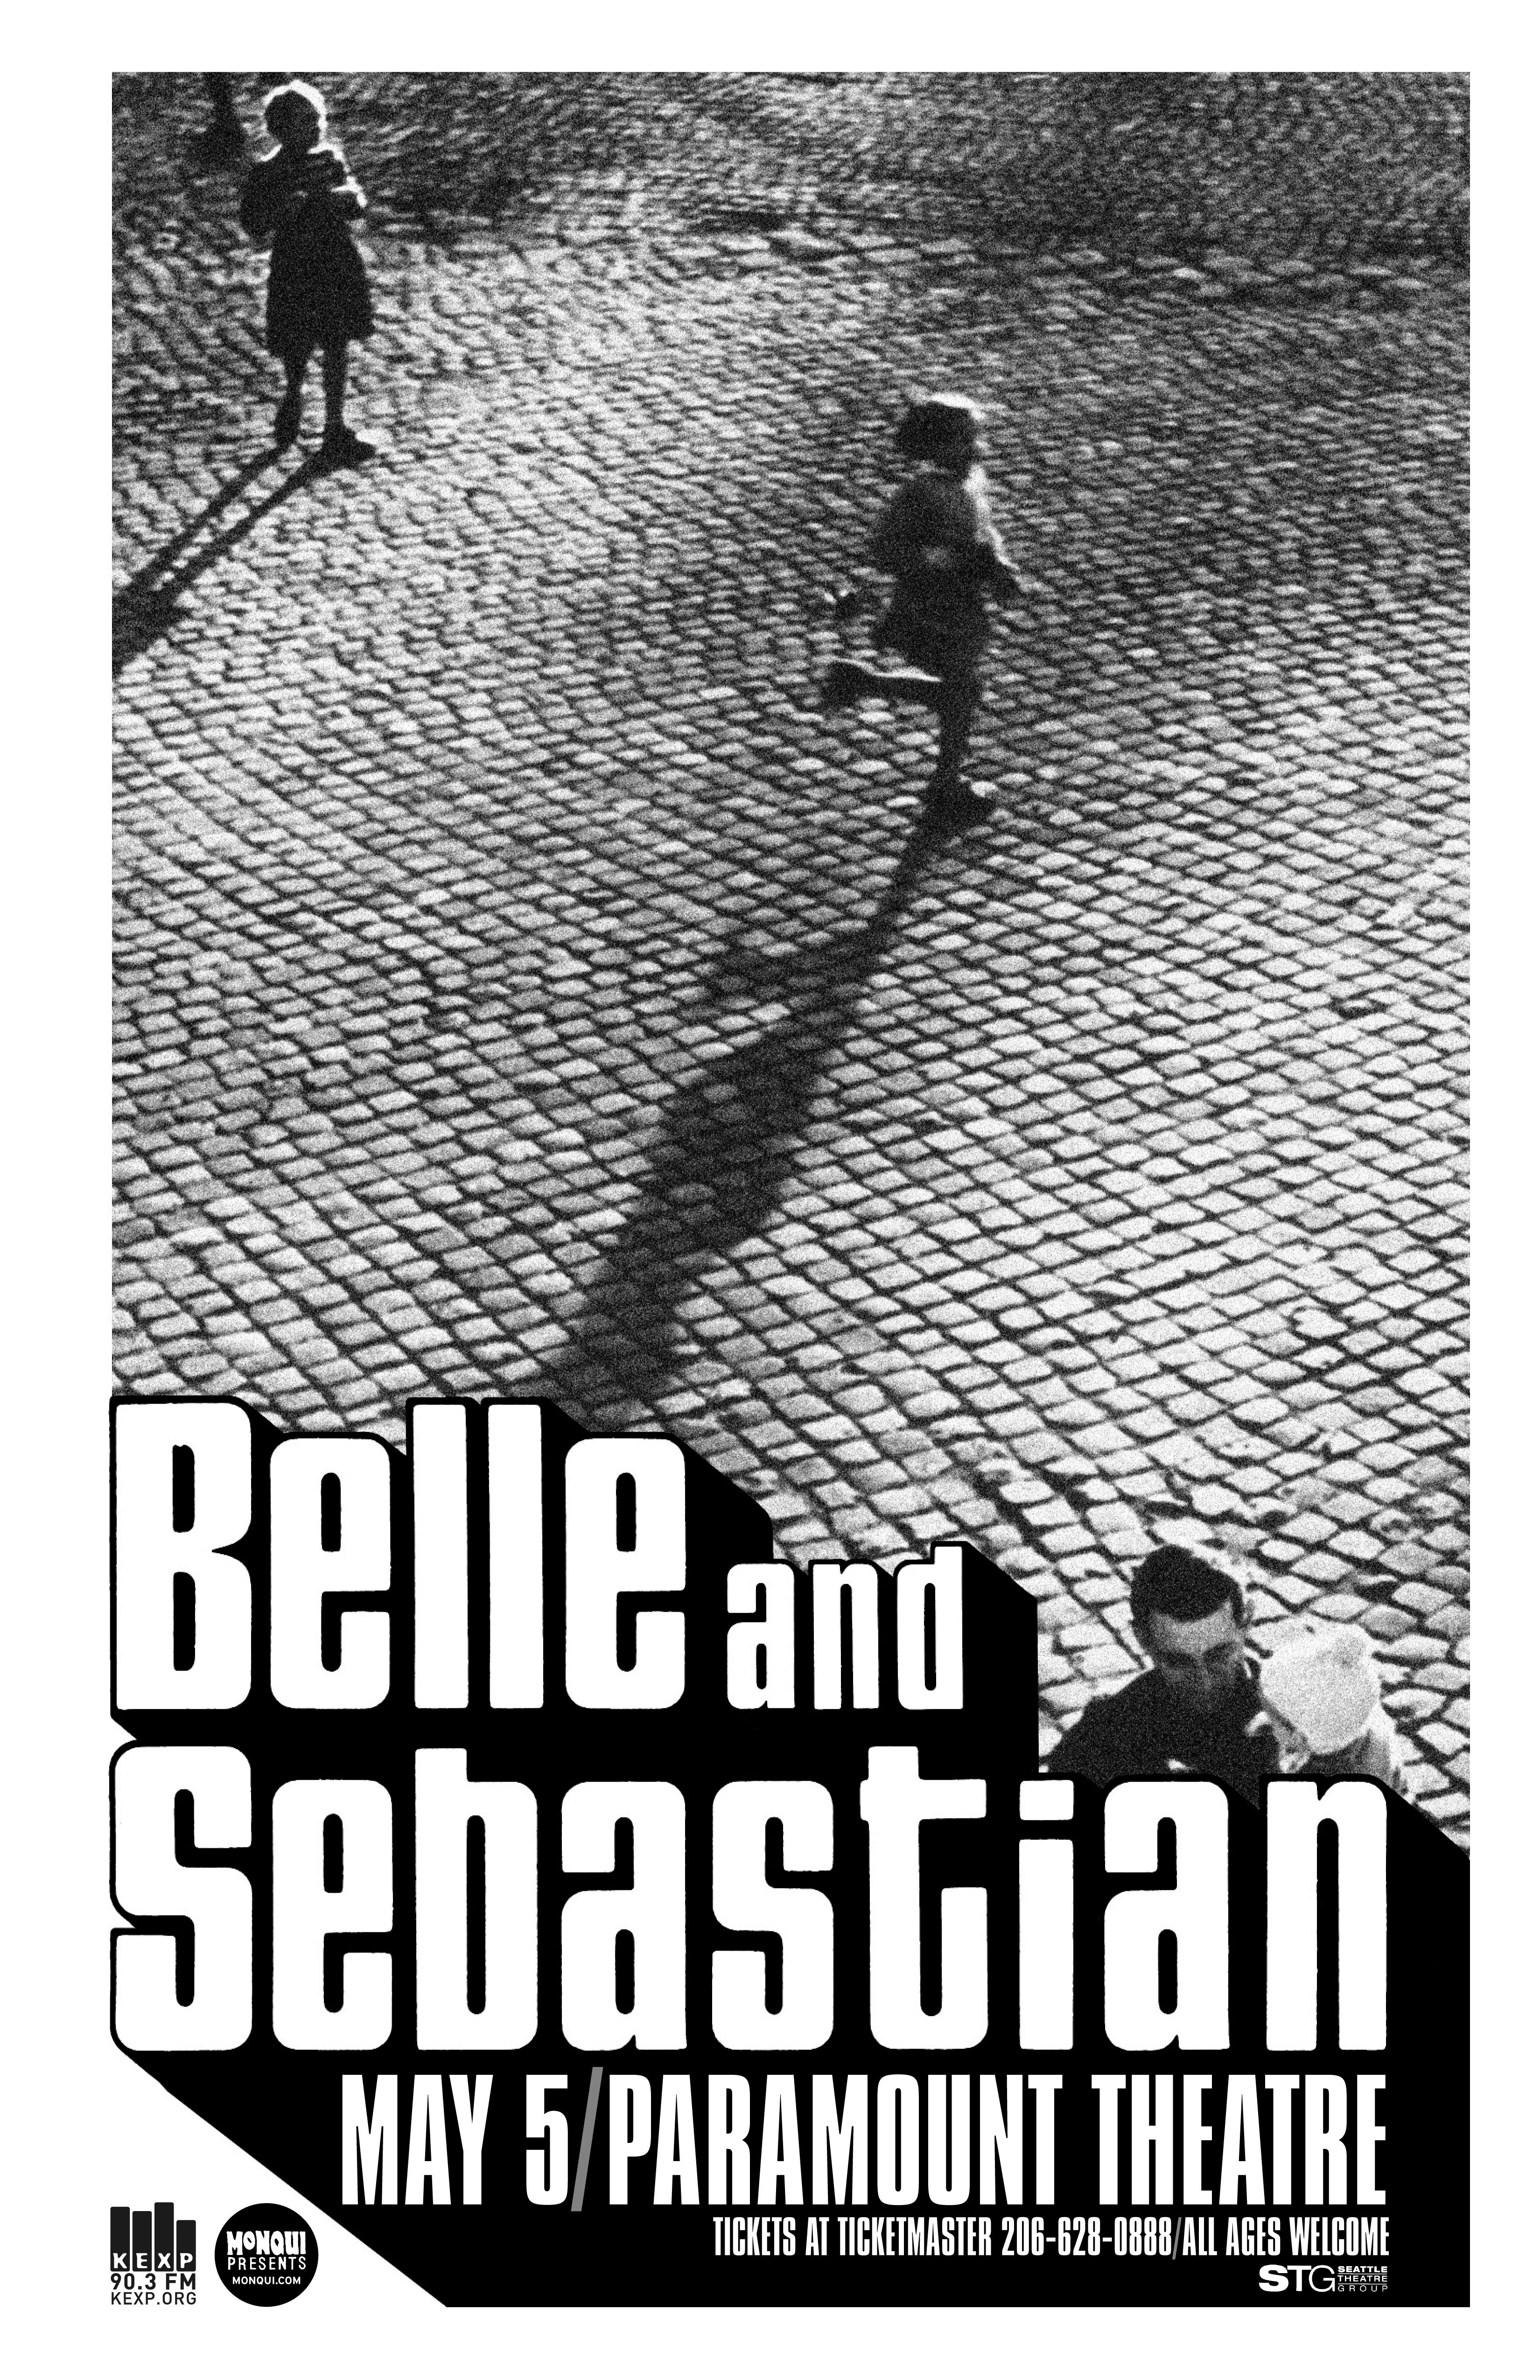 MXP-205.4 Belle & Sebastian 2011 Paramount Theatre  May 5 Concert Poster